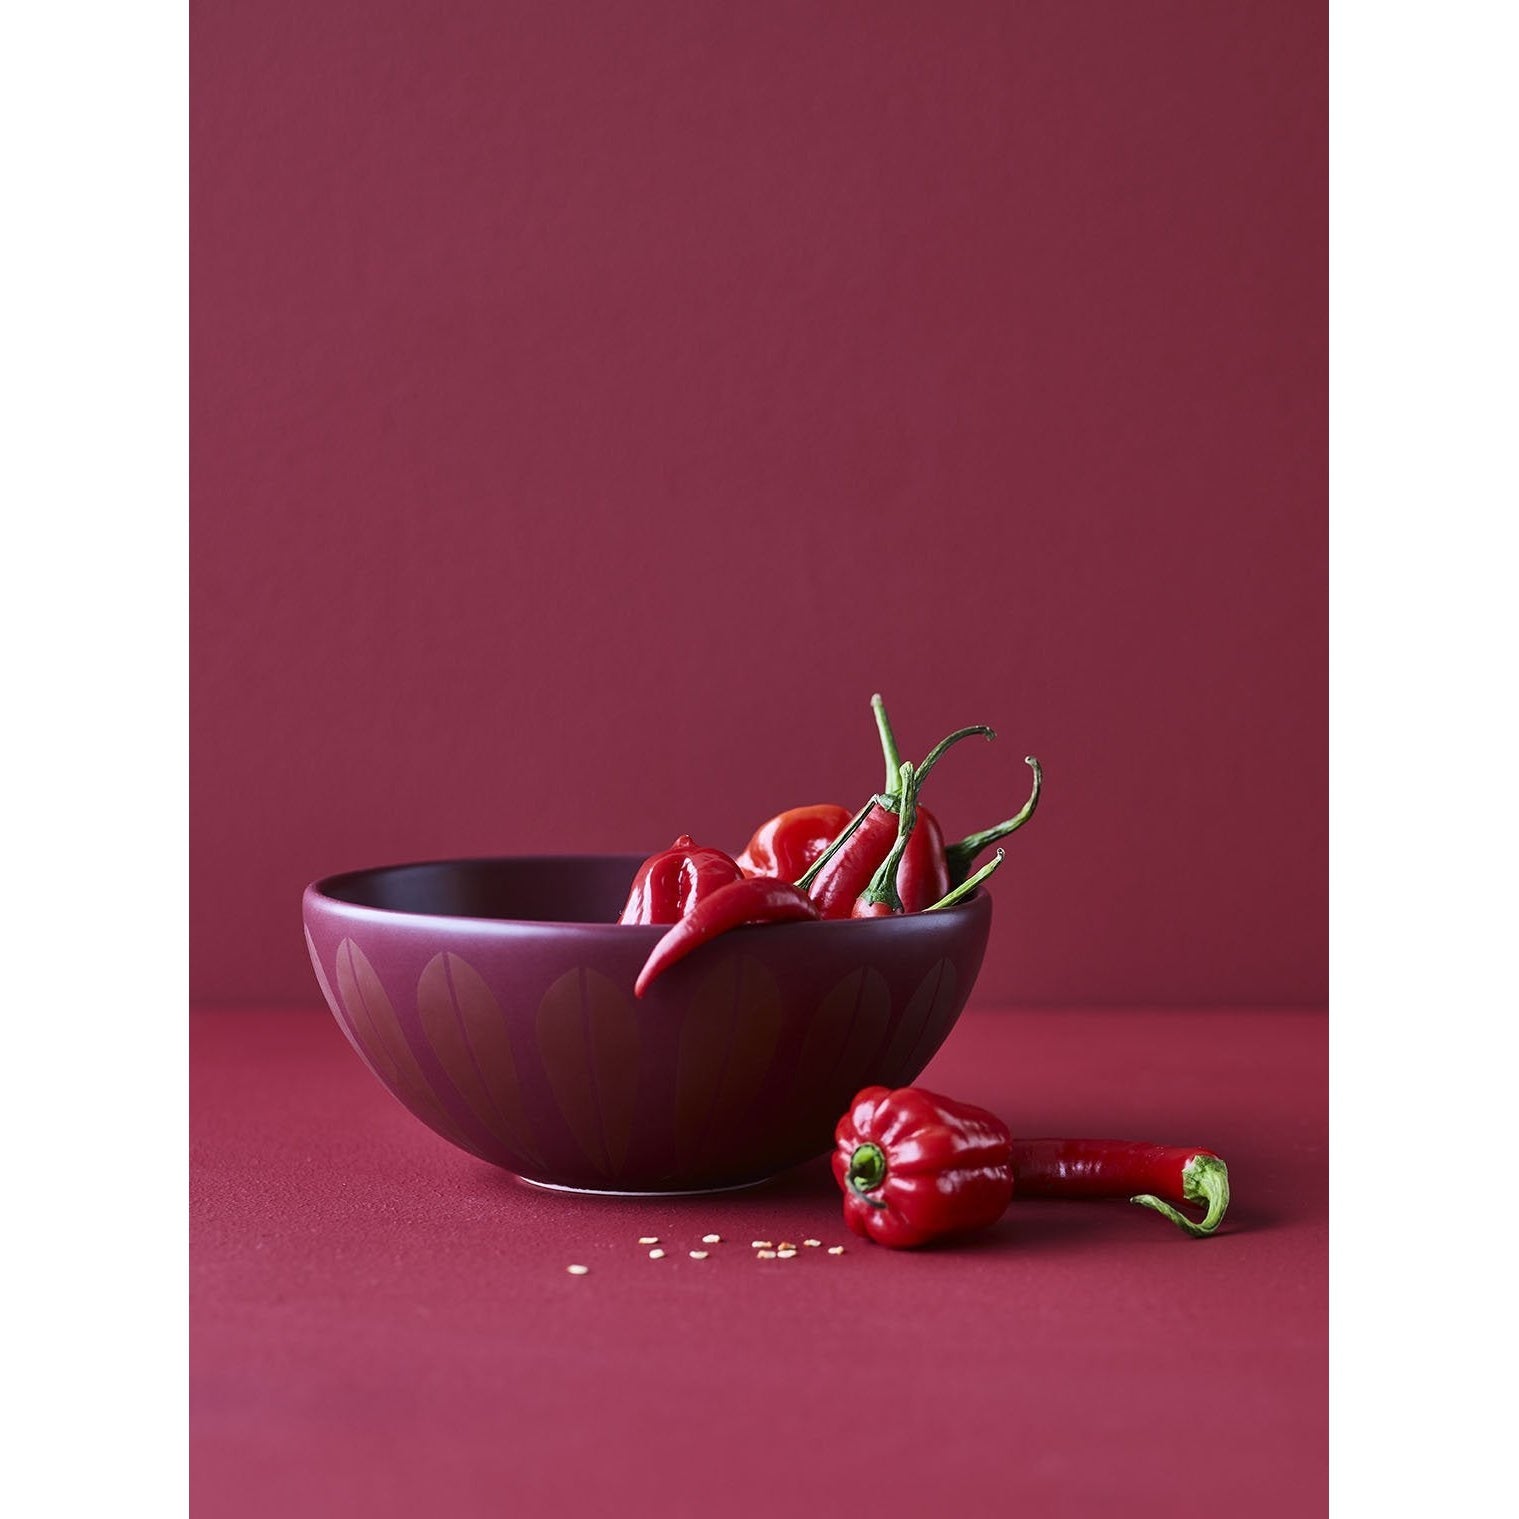 Lucie Kaas Arne Clausen Bowl scuro rosso, 24 cm